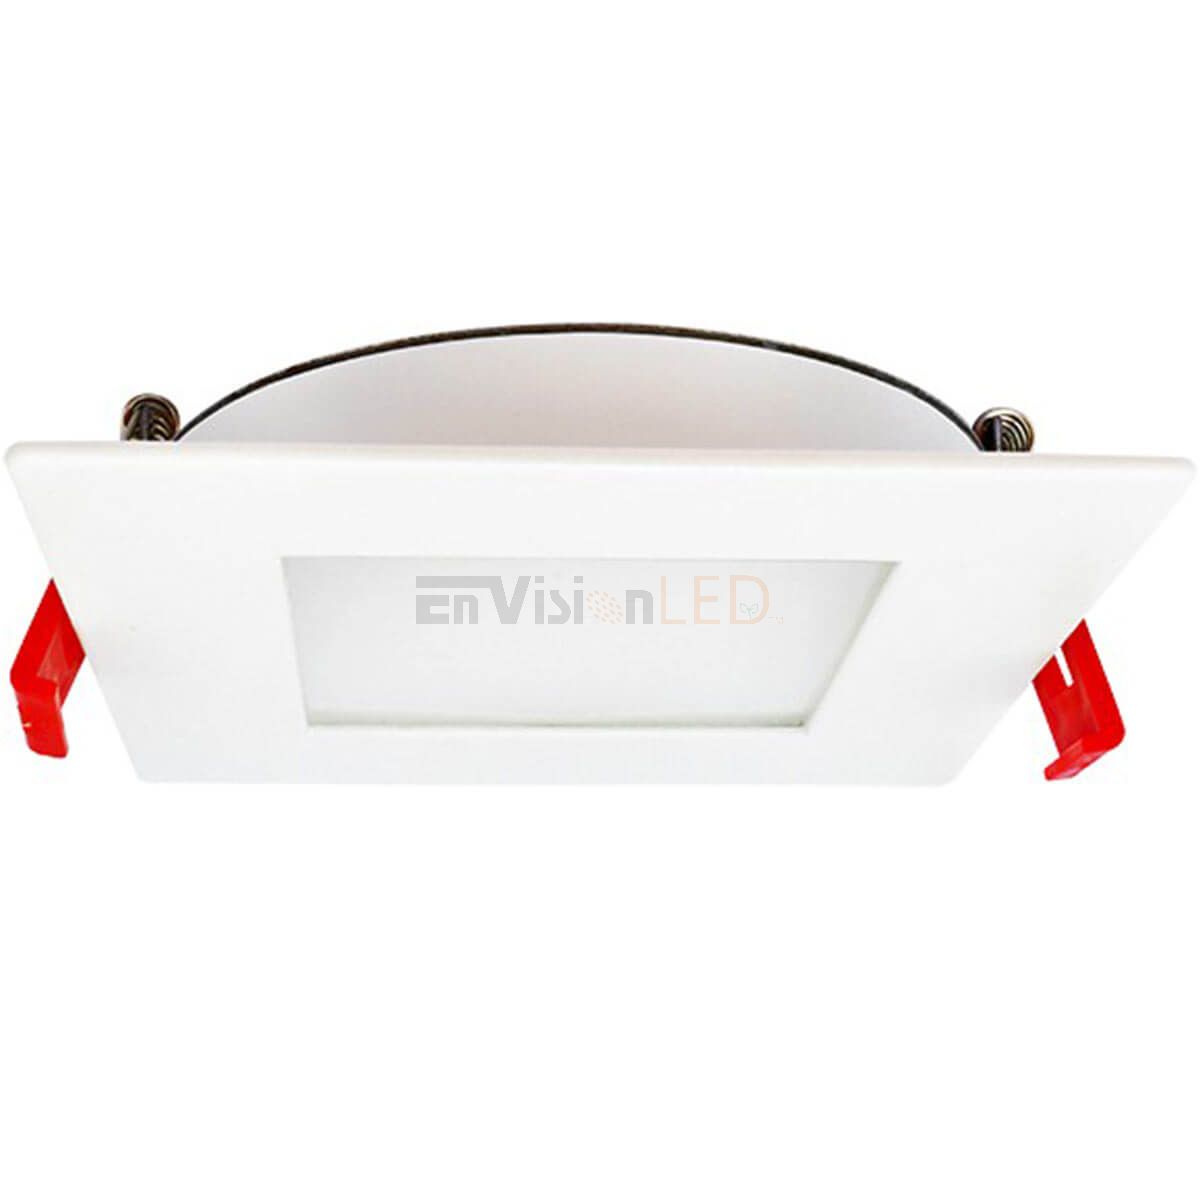 Envision 4" LED J-Box Square Panel Downlight 5CCT- White, Black, Brushed Nickel - Sonic Electric